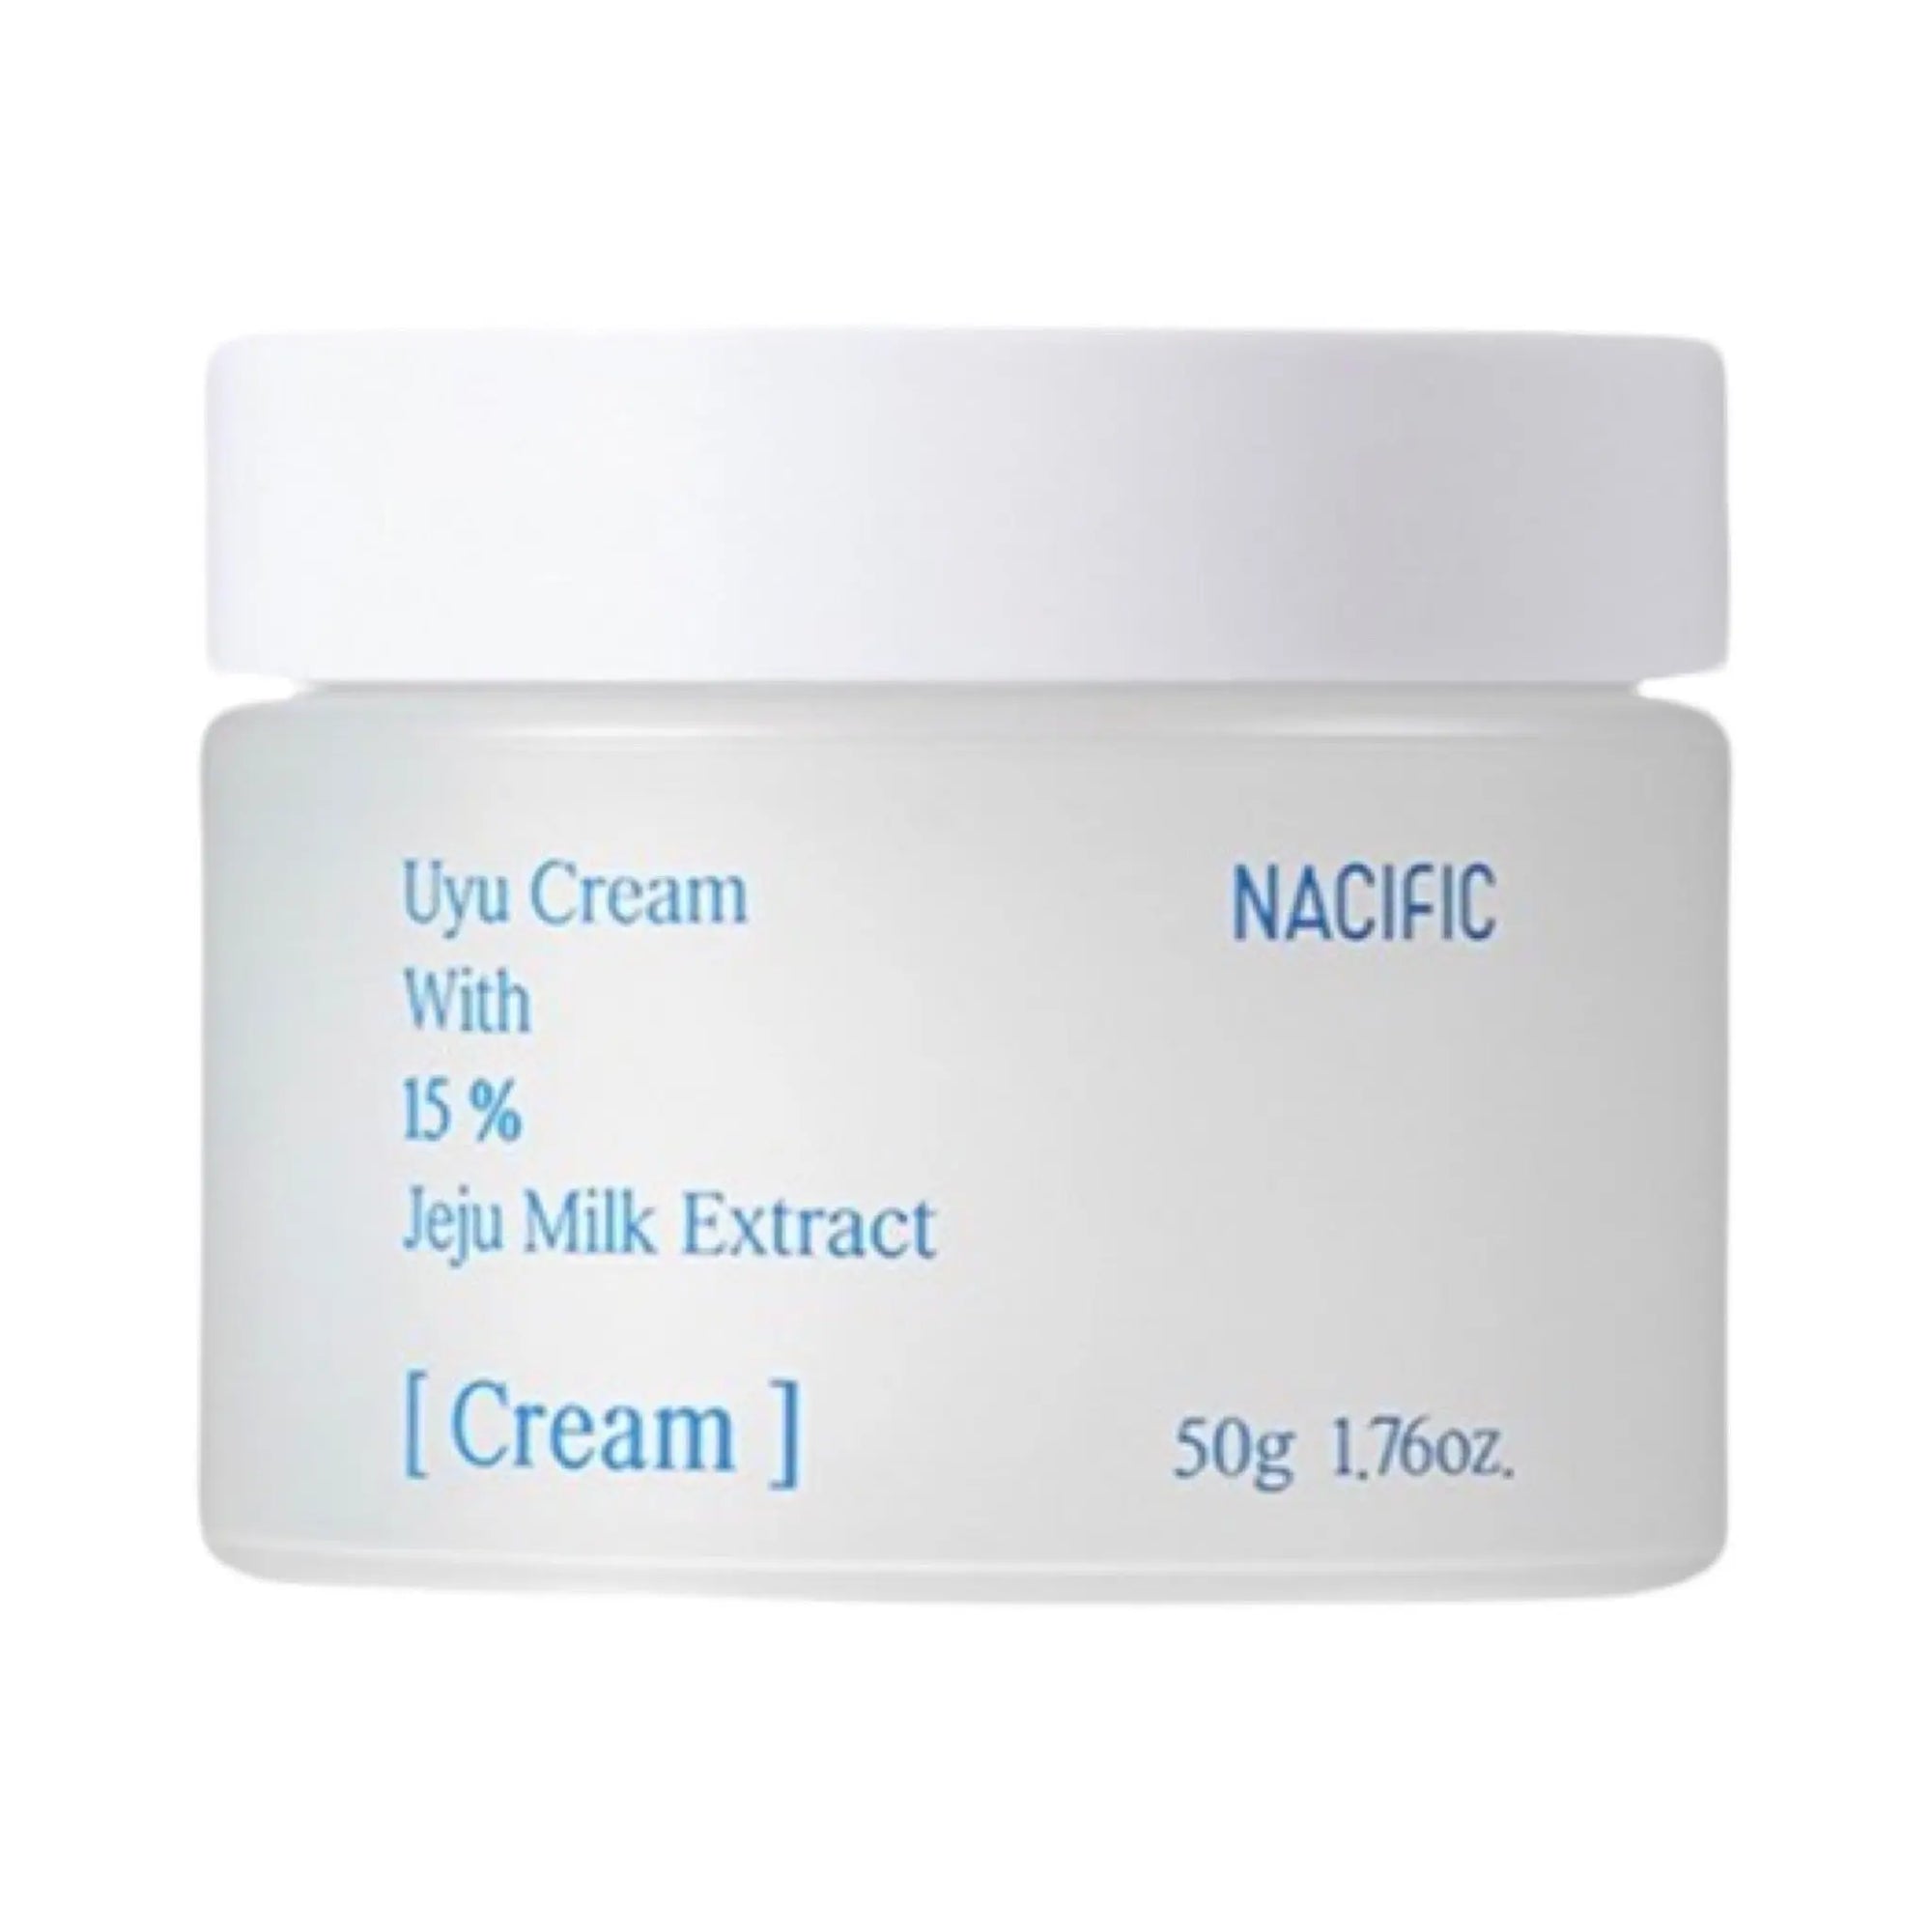 Nacific - Uyu Cream 50g Nacific